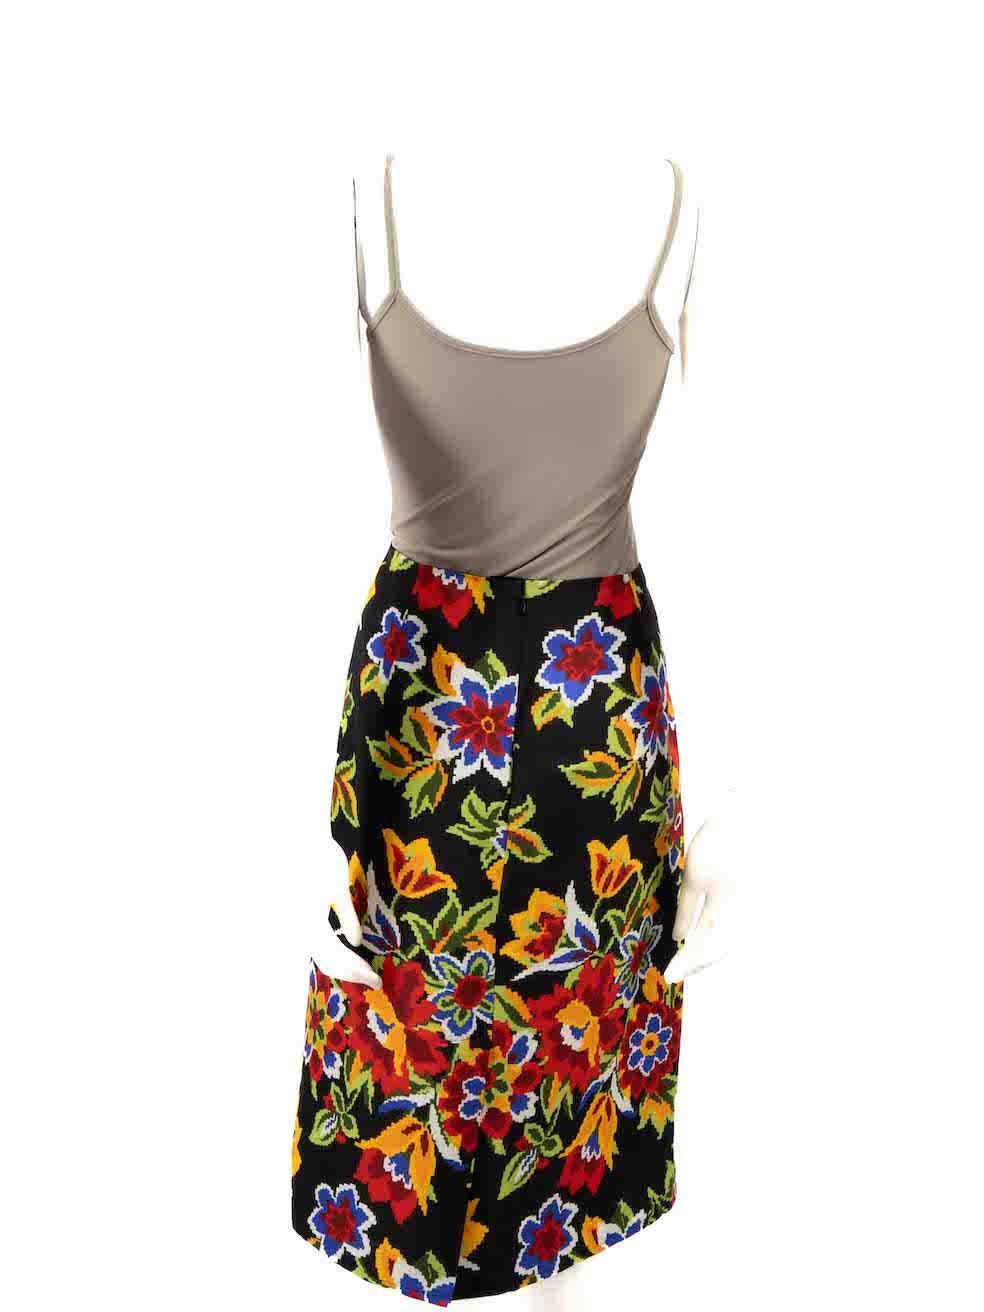 Carolina Herrera Pixel Flower Printed Skirt Size XXXL In Good Condition For Sale In London, GB